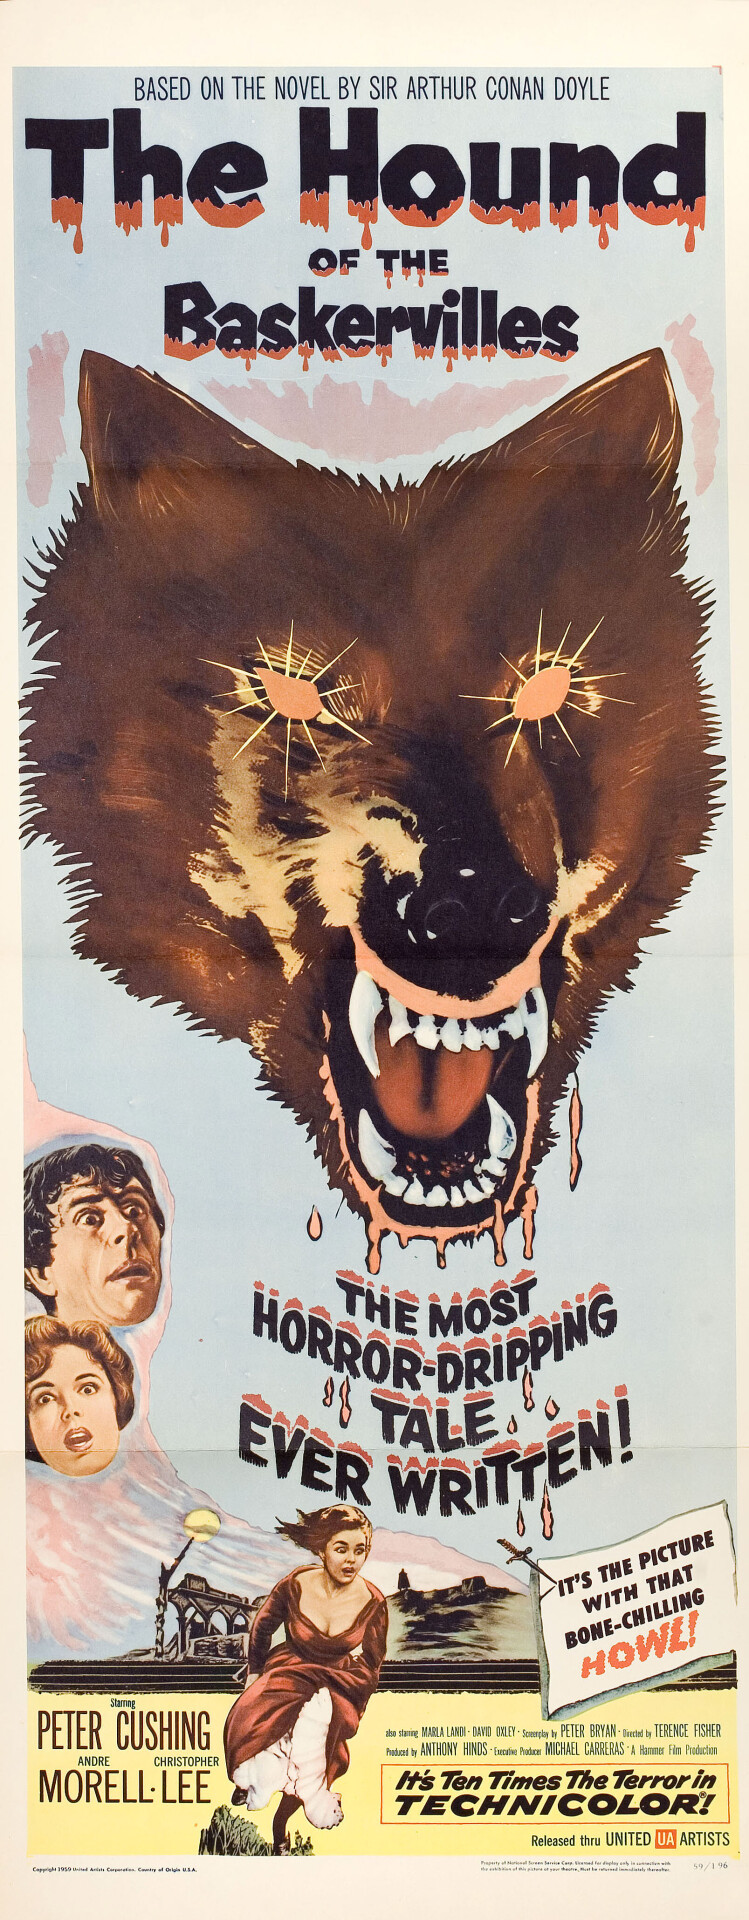 Собака Баскервилей (The Hound of the Baskervilles, 1959), режиссёр Теренс Фишер, американский постер к фильму (ужасы, 1959 год)